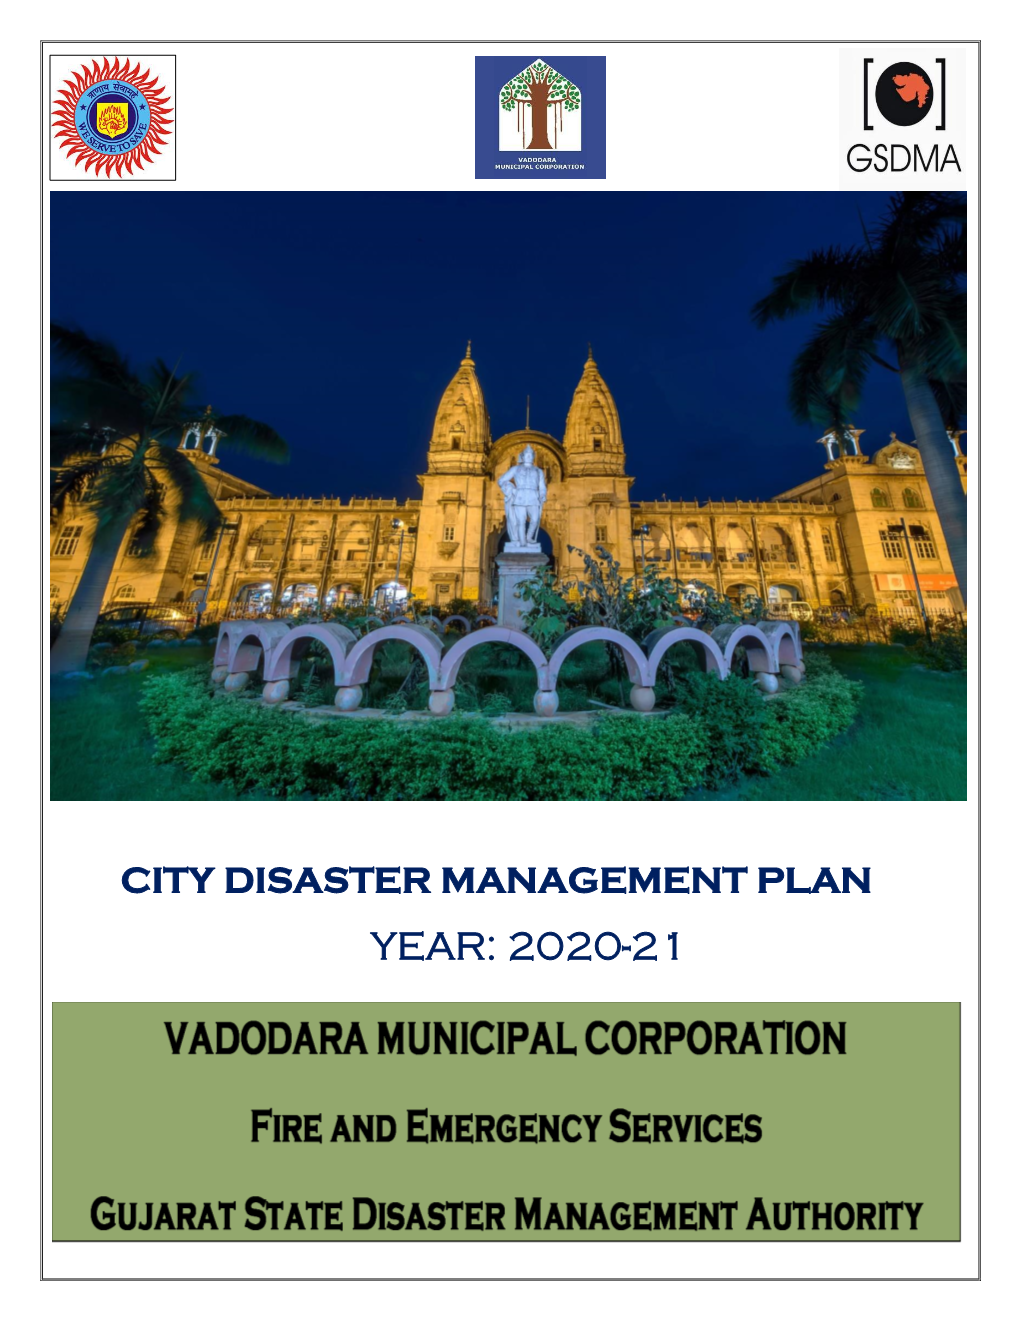 City Disaster Management Plan 2020-21